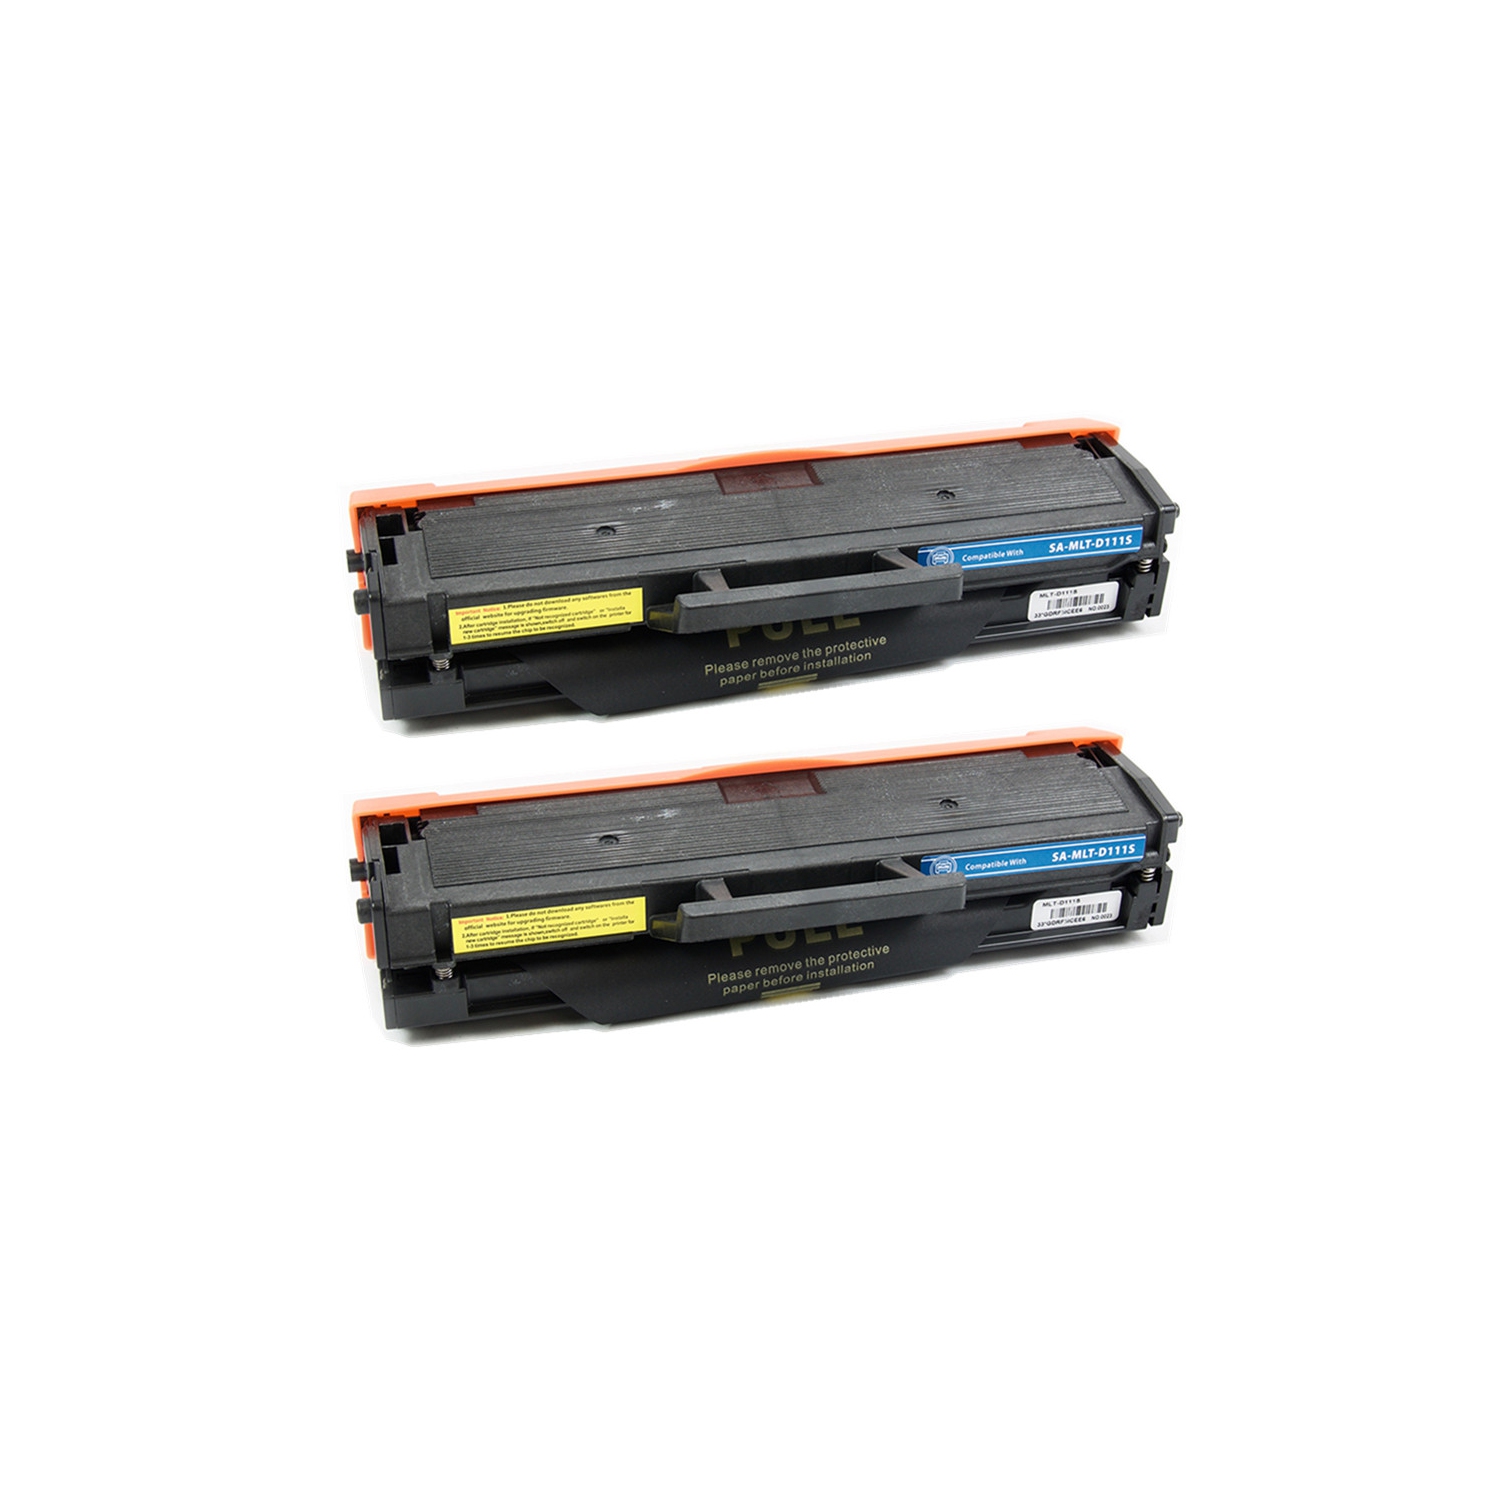 Gotoners™ Generic Packaged 2PK Replacement MLT-D111S Black Toner Cartridge For Samsung Xpress SL-M2020W, SL-M2022, SL-M2070, SL-M2070FW, SL-M2070W